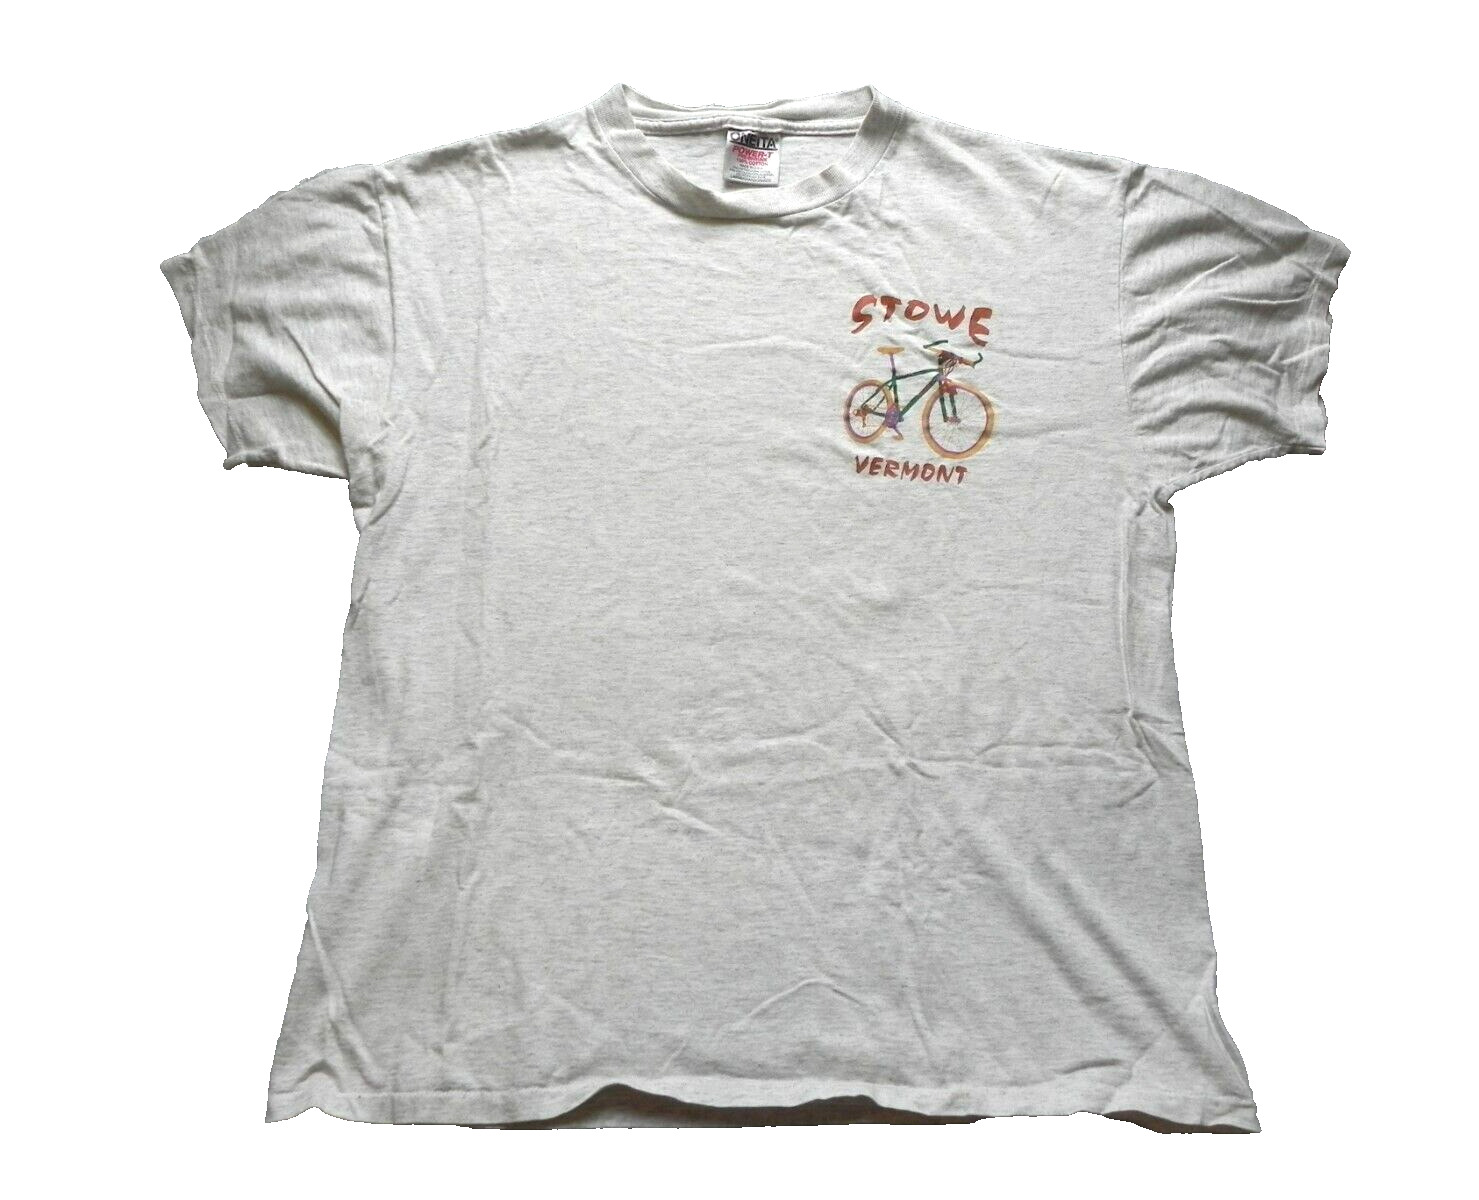 Vintage Bike Shirt Adult Large Stowe Vermont Biking Single Stitch Cycling Mens